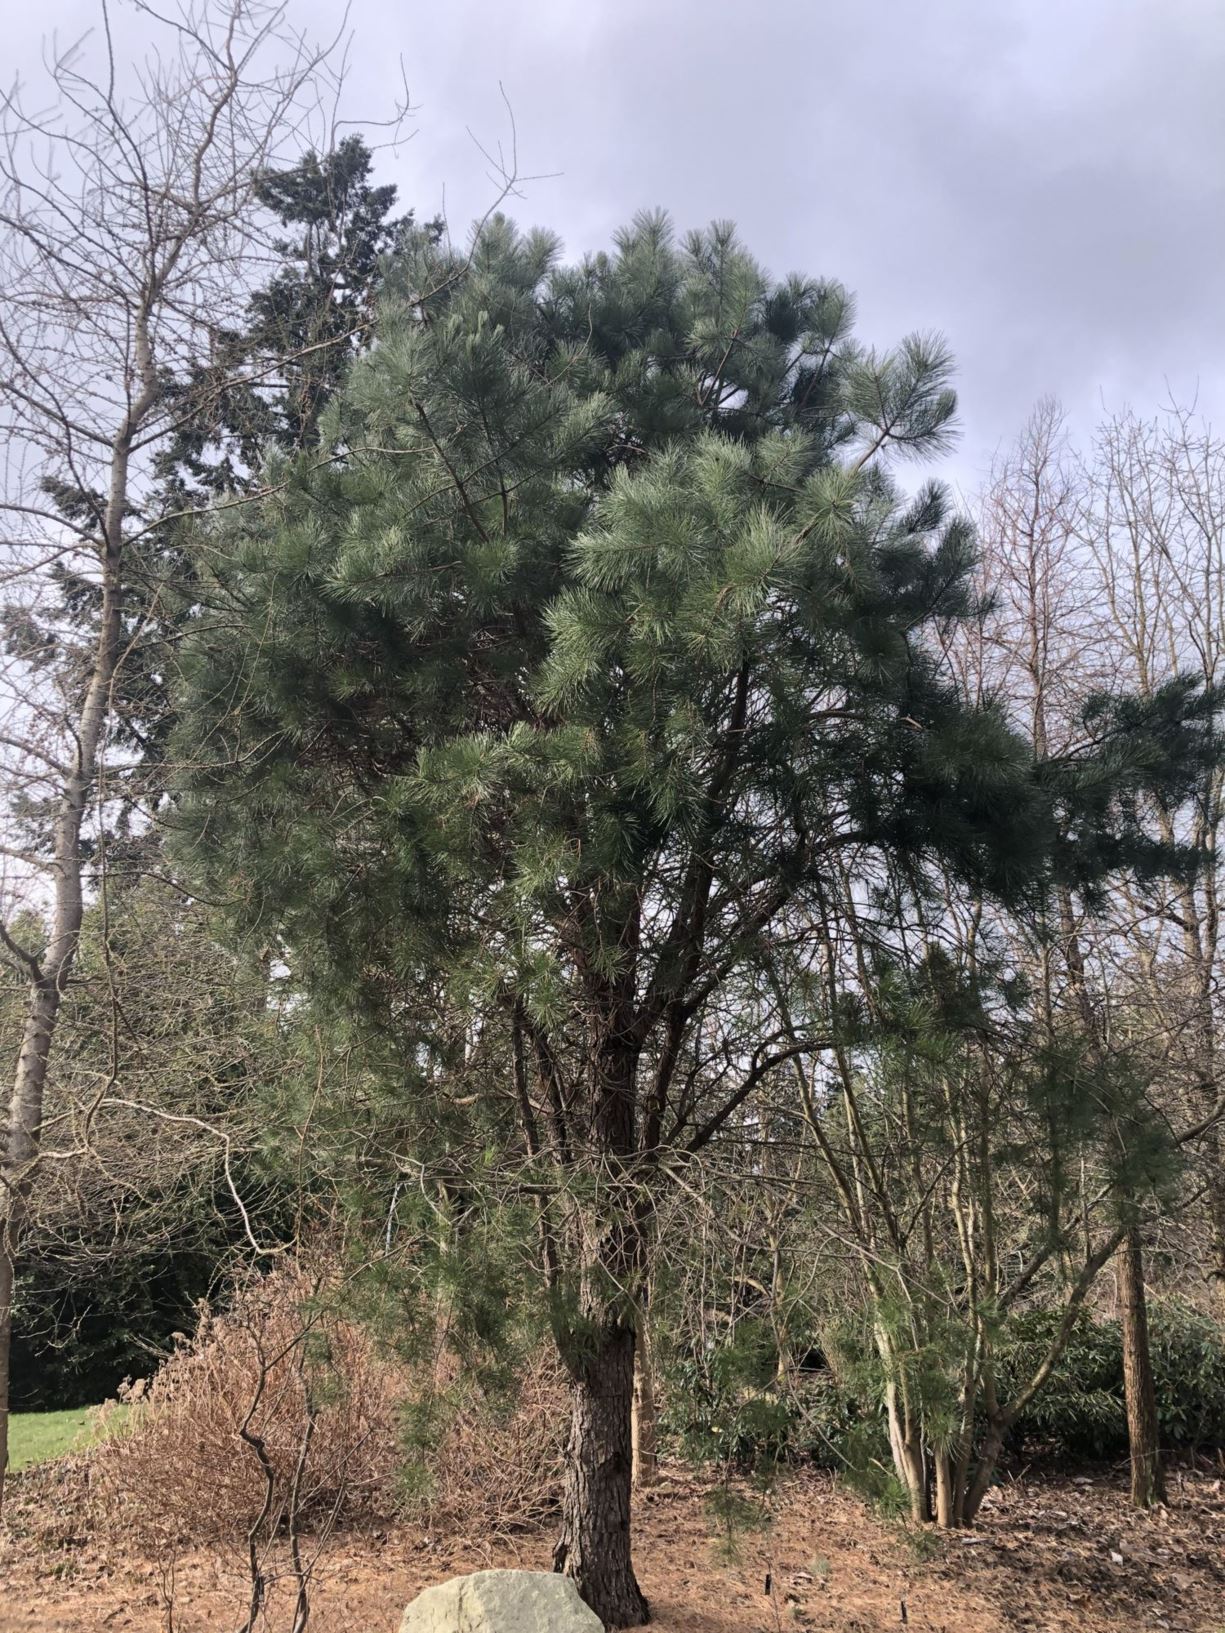 Pinus rigida - pitch pine